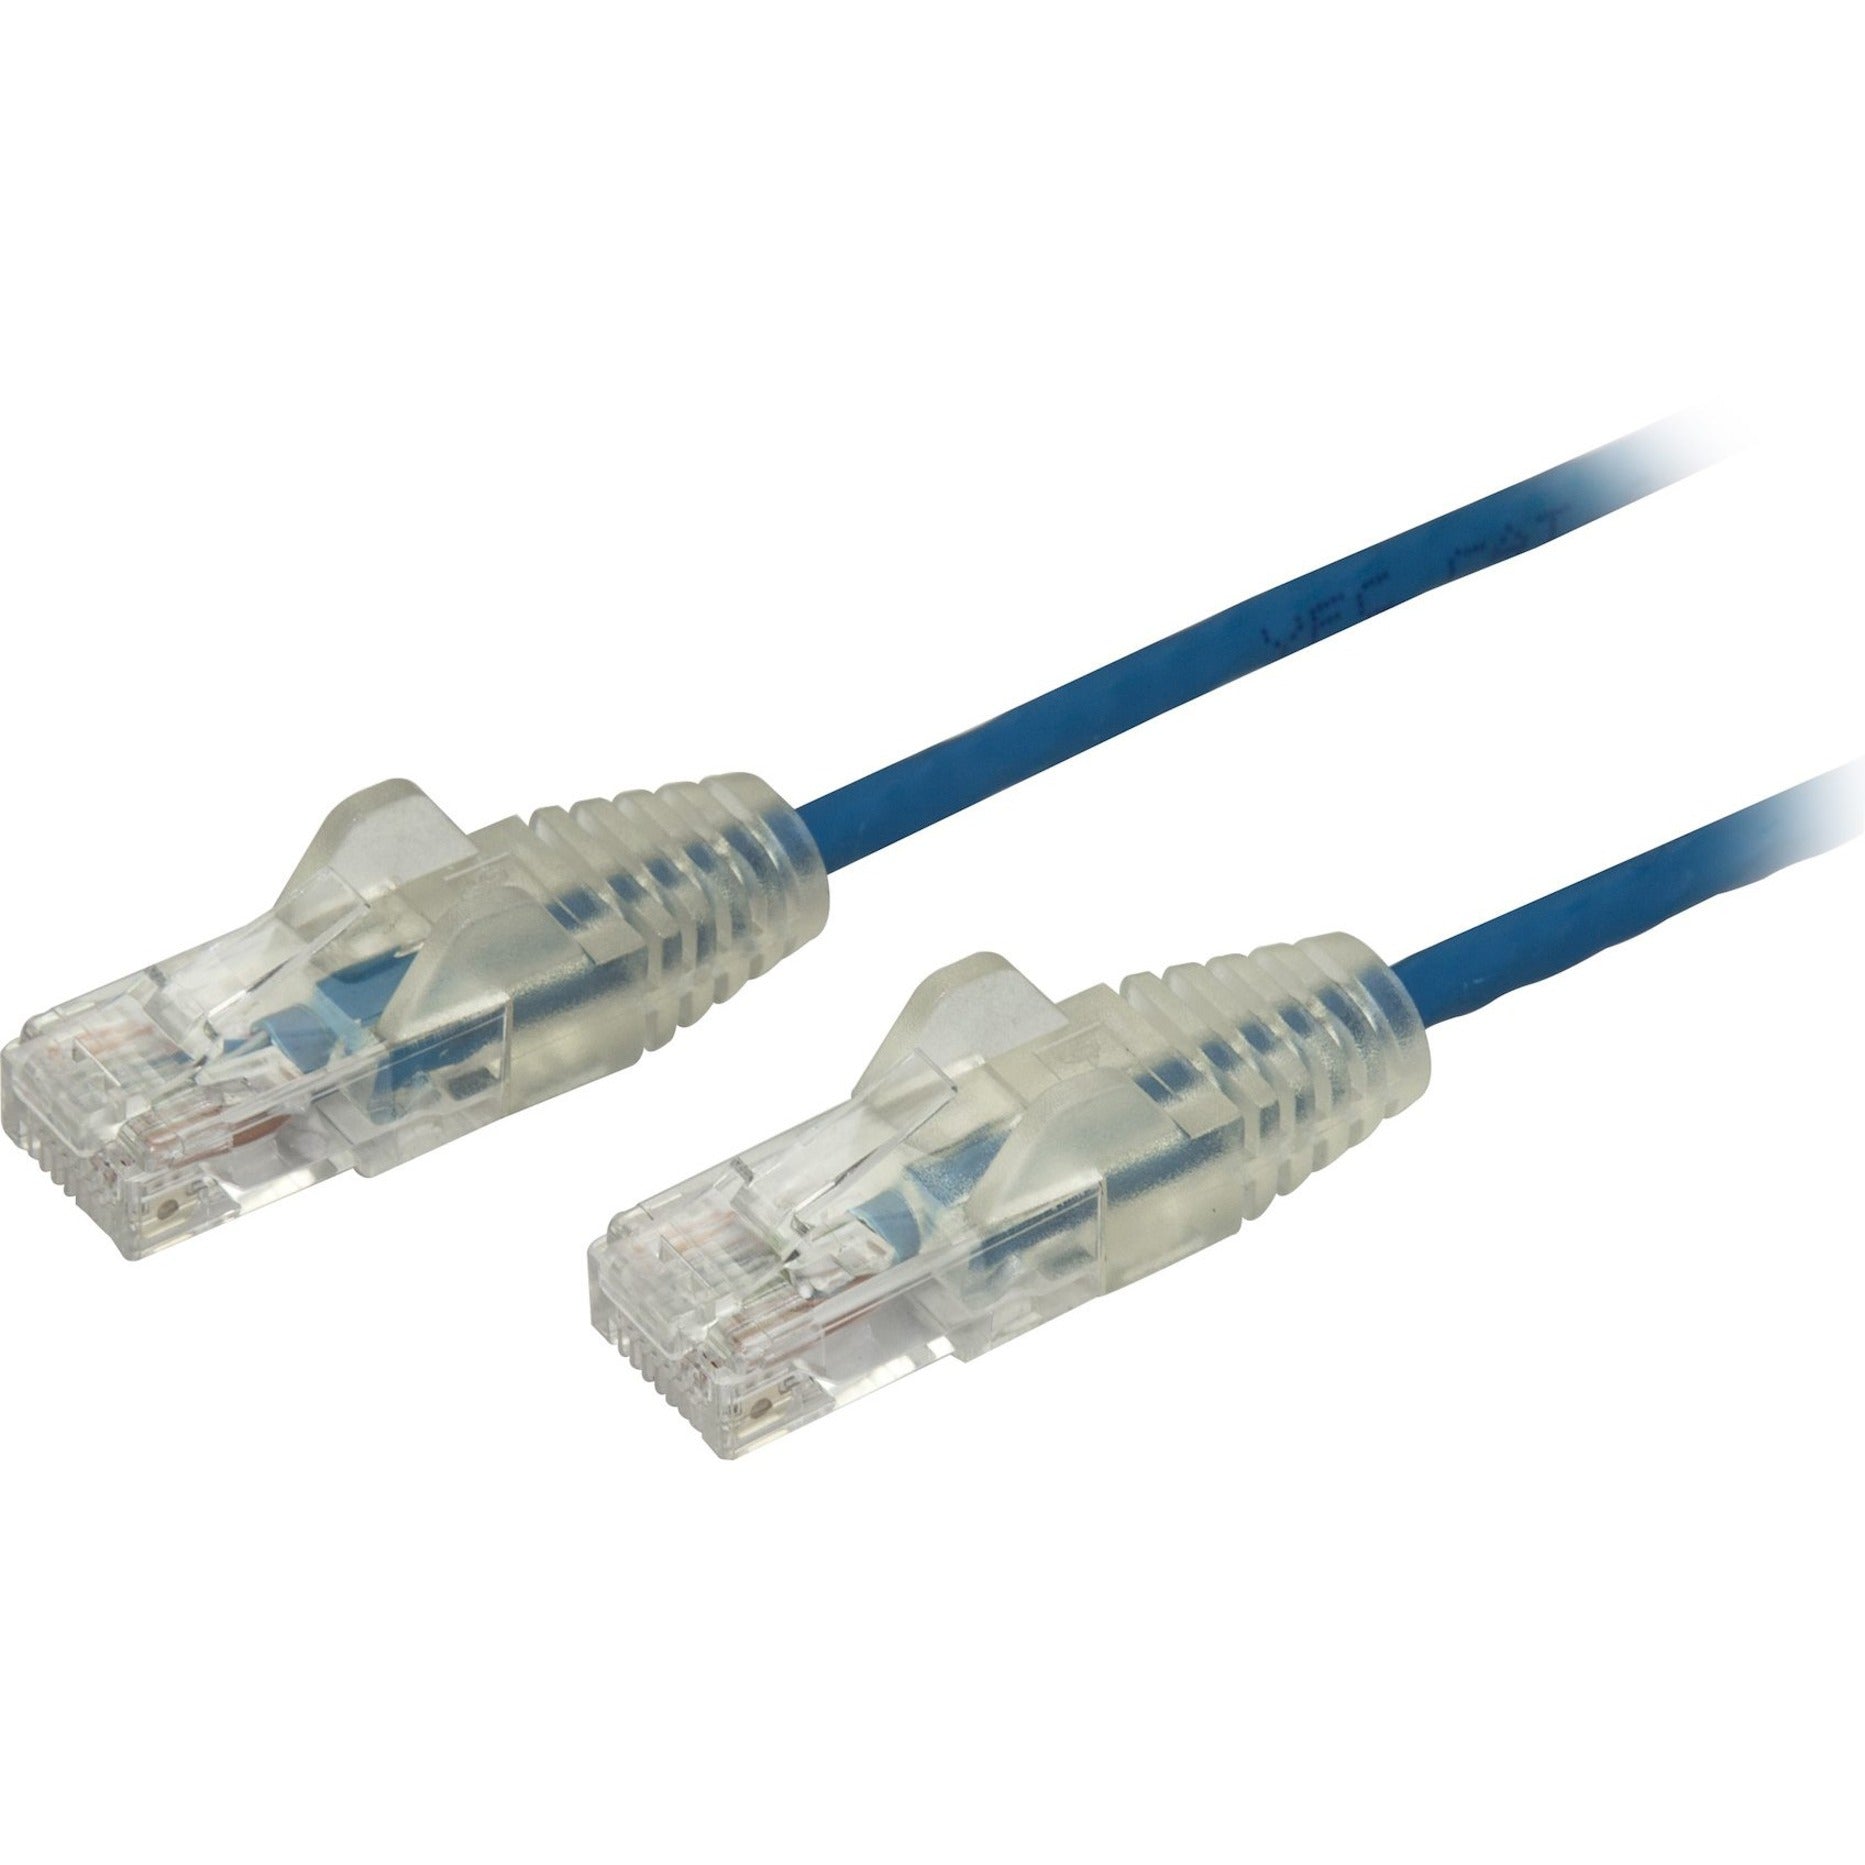 StarTech.com N6PAT3BLS Cat6 Patch Network Cable, 3 ft Blue Ethernet Cable - Slim, Snagless RJ45 Connectors, Cat6 Cable, Cat6 Patch Cable, Cat6 Network Cable